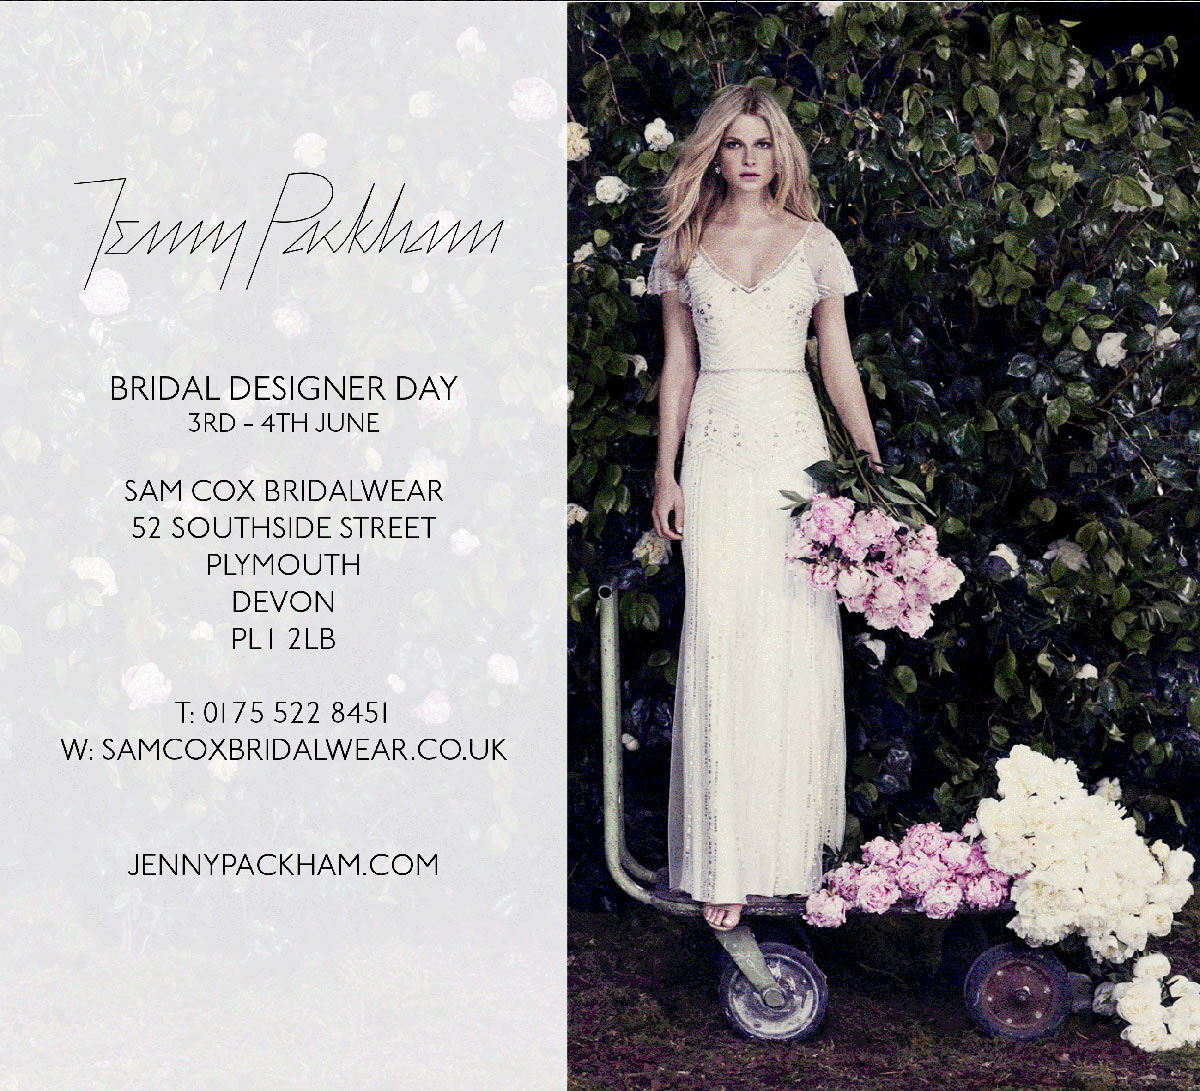 Jenny Packham designer days at Sam Cox Bridalwear